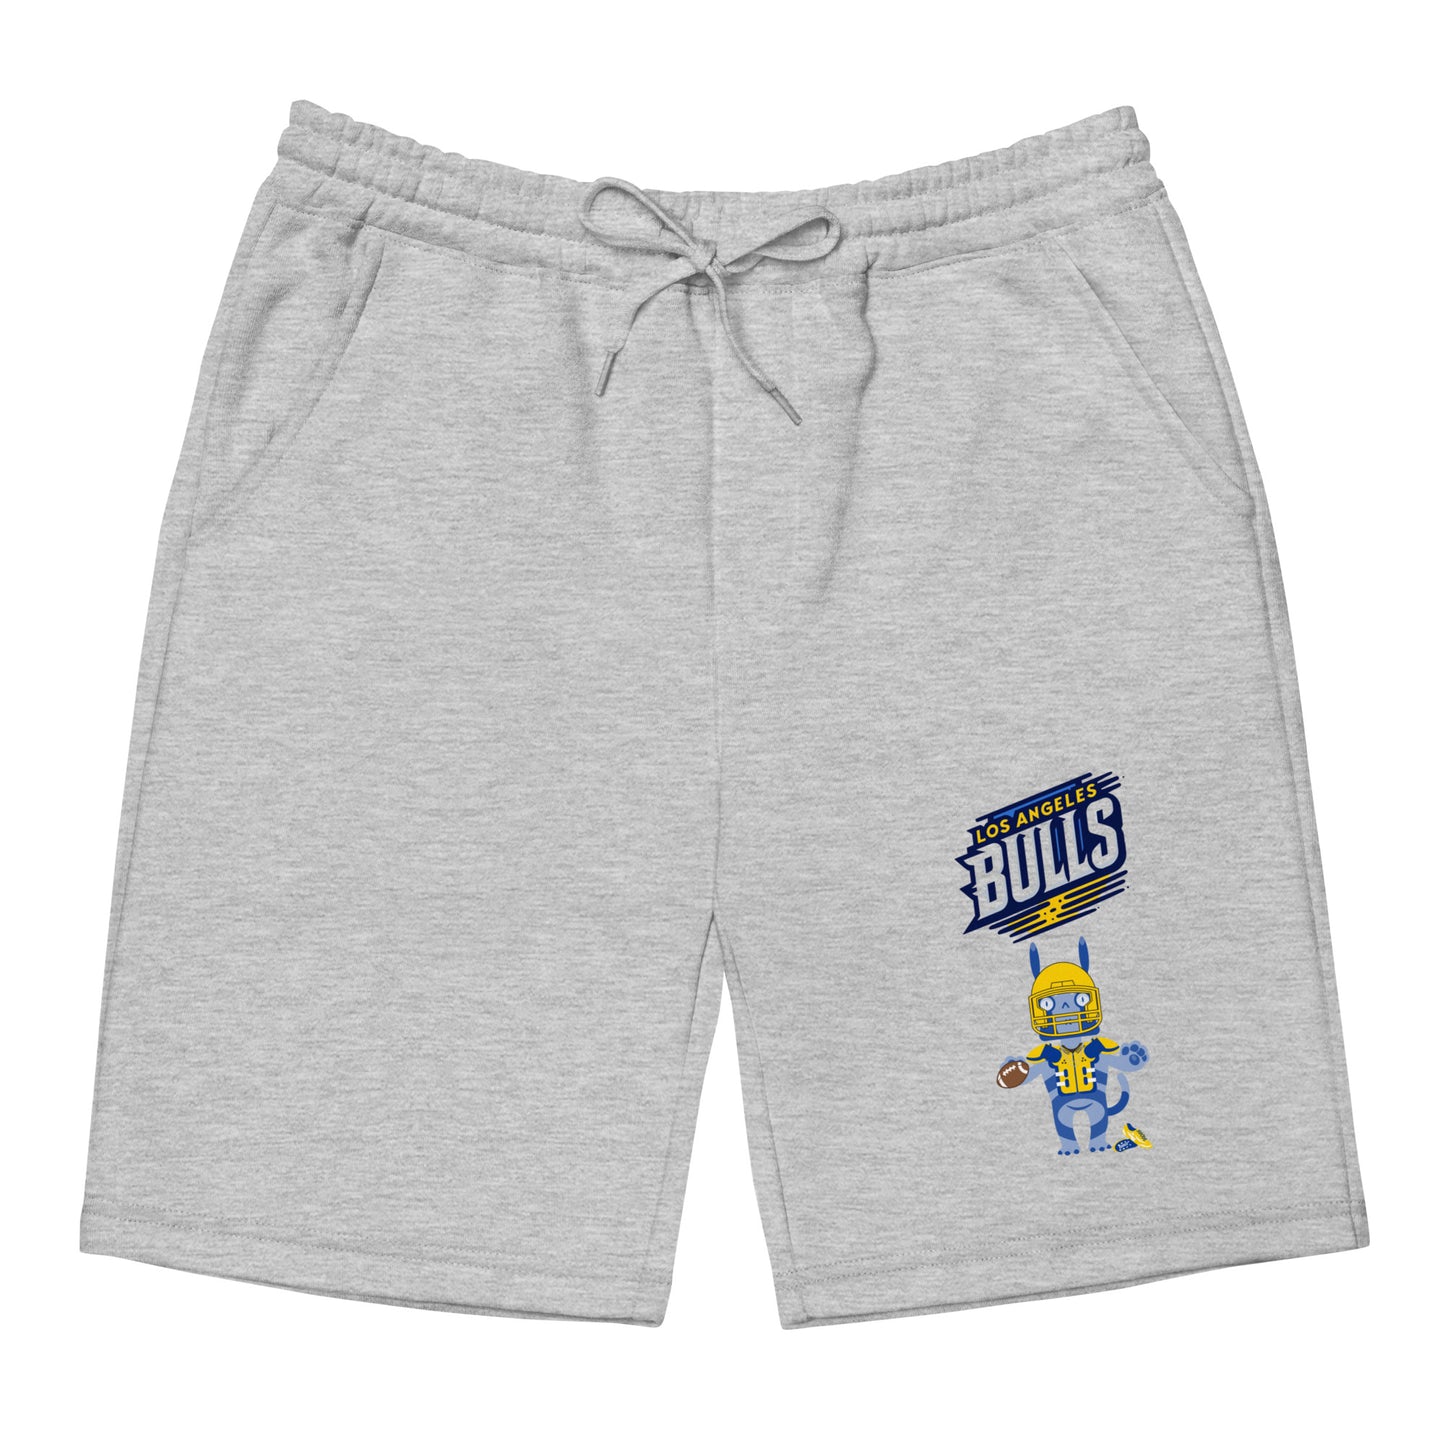 Los Angeles Bulls F Men's fleece shorts